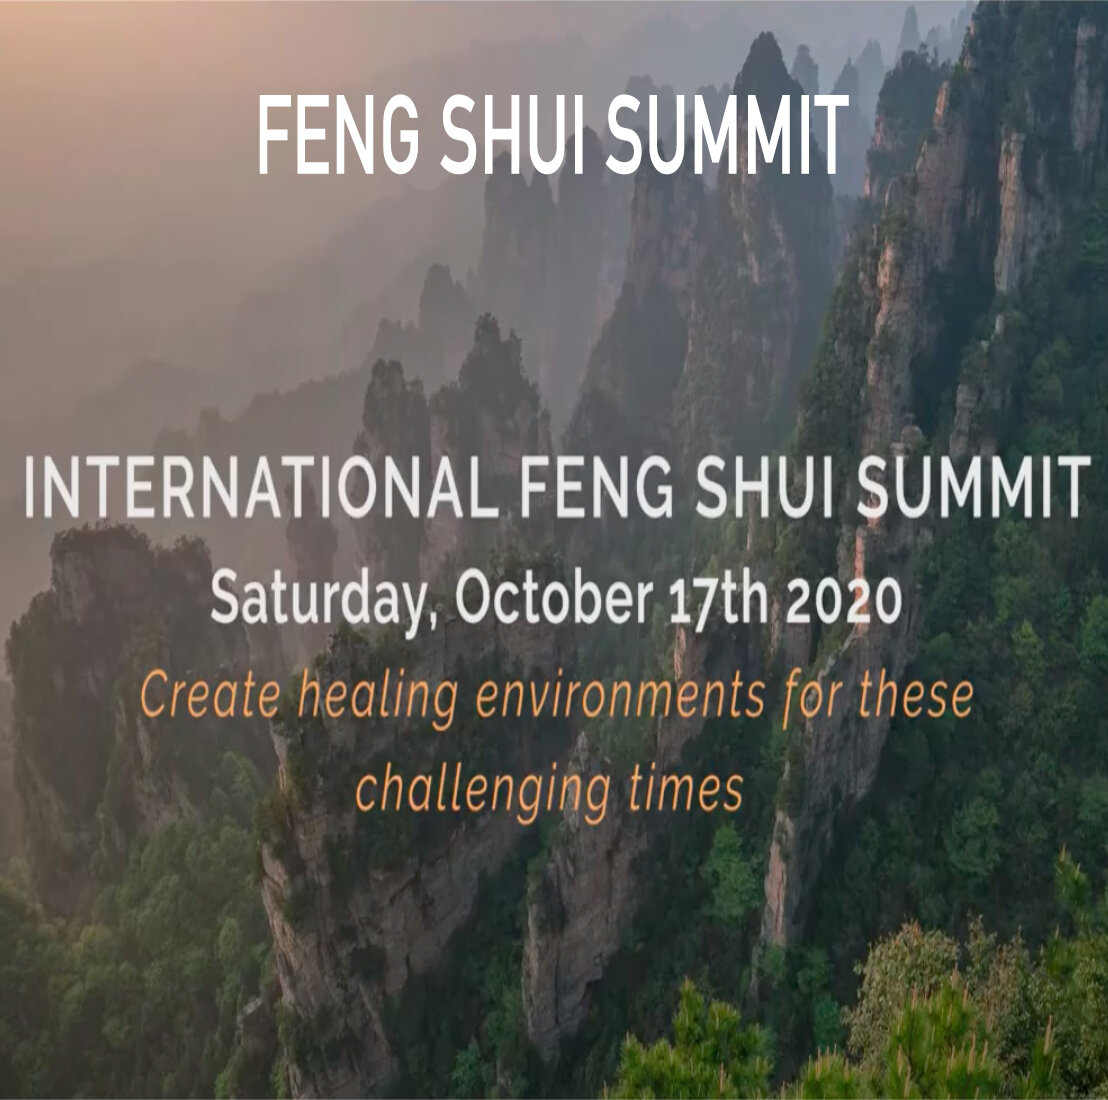 MBD. The International Feng Shui Summit